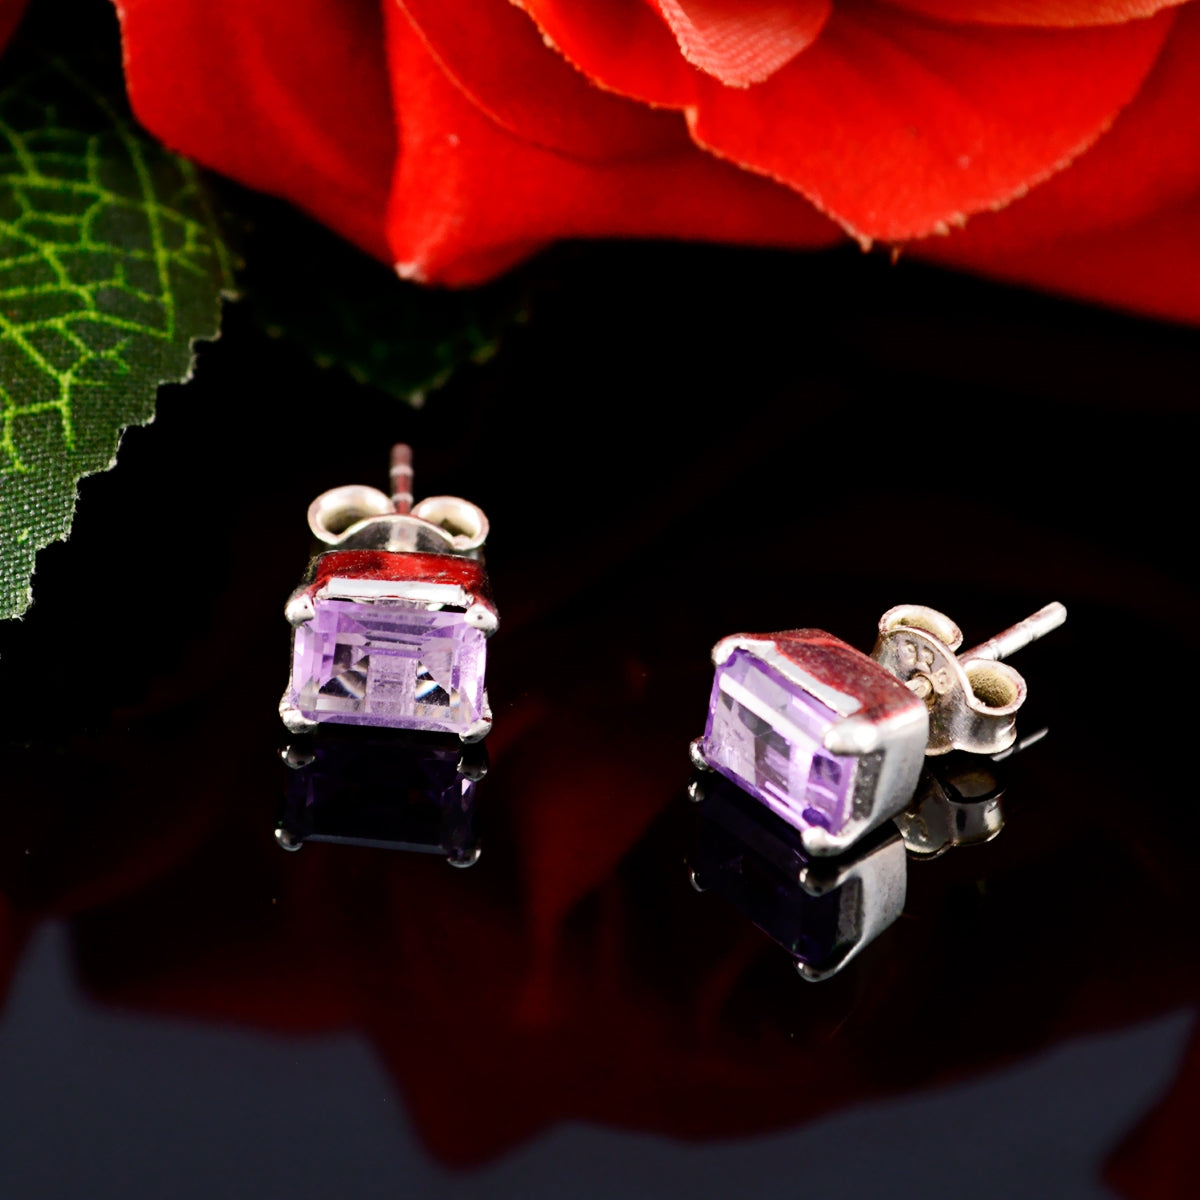 Riyo Nice Gemstone Octogon Faceted Purple Amethyst Silver Earring gift for mom birthday